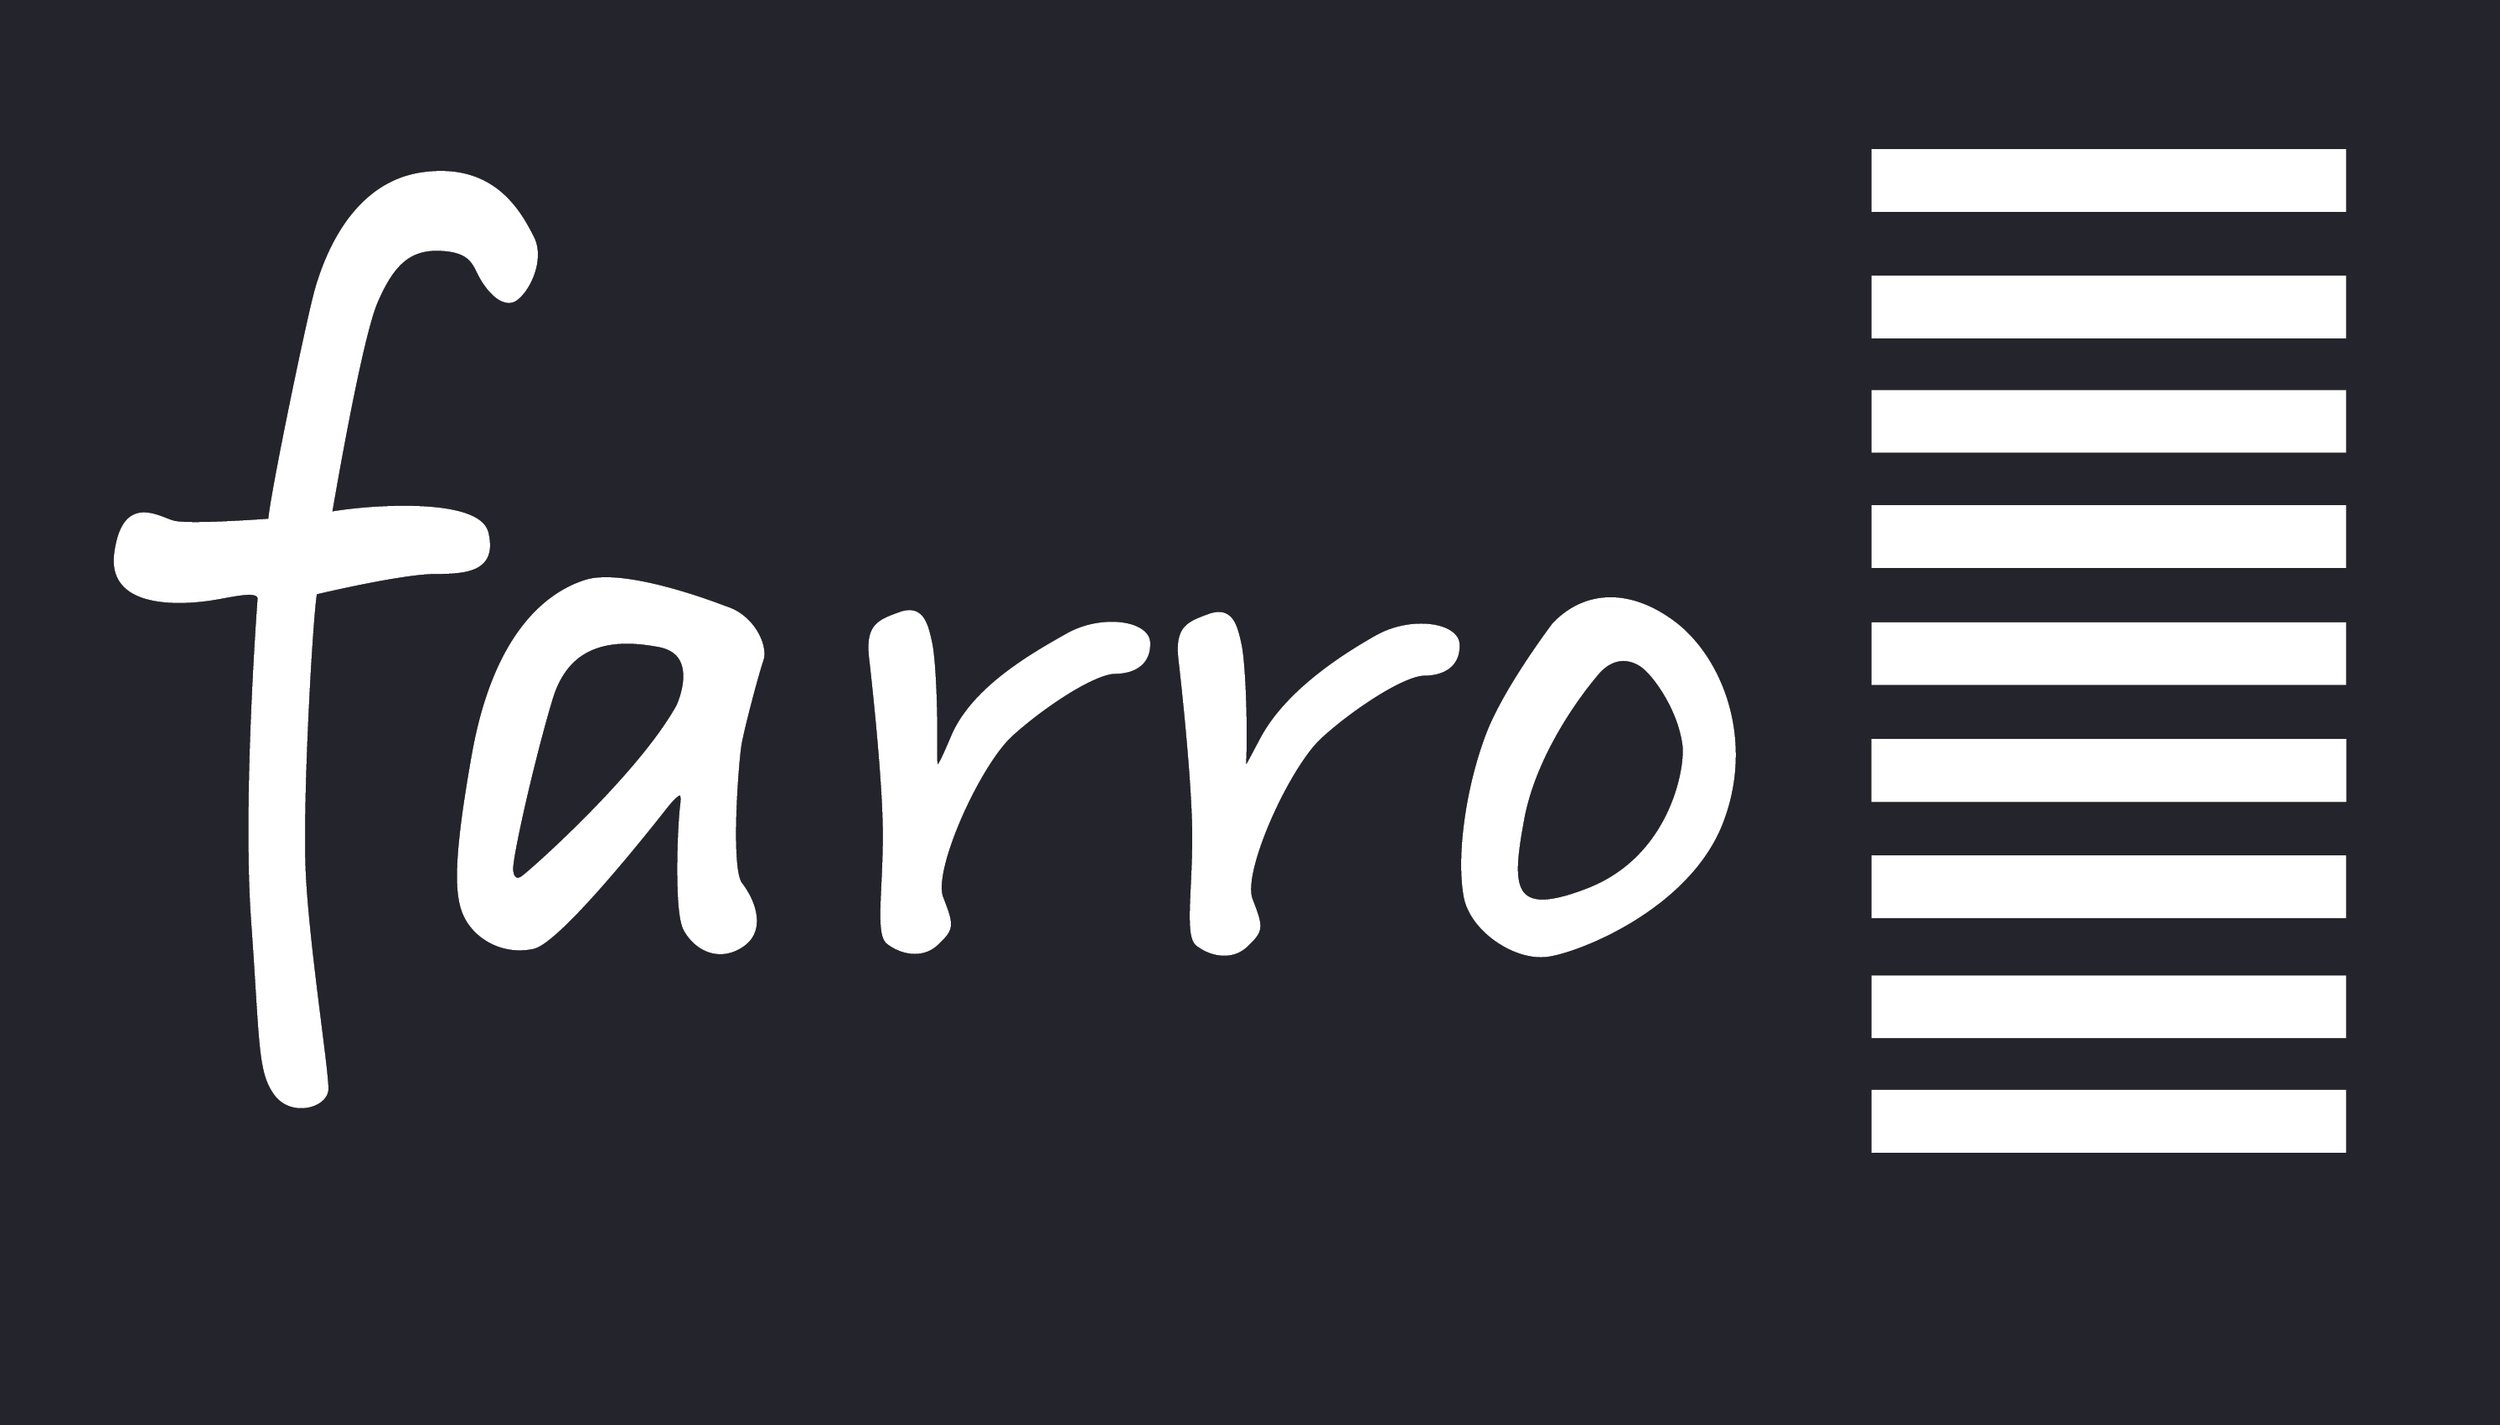 Farro logo (2) (002).jpg